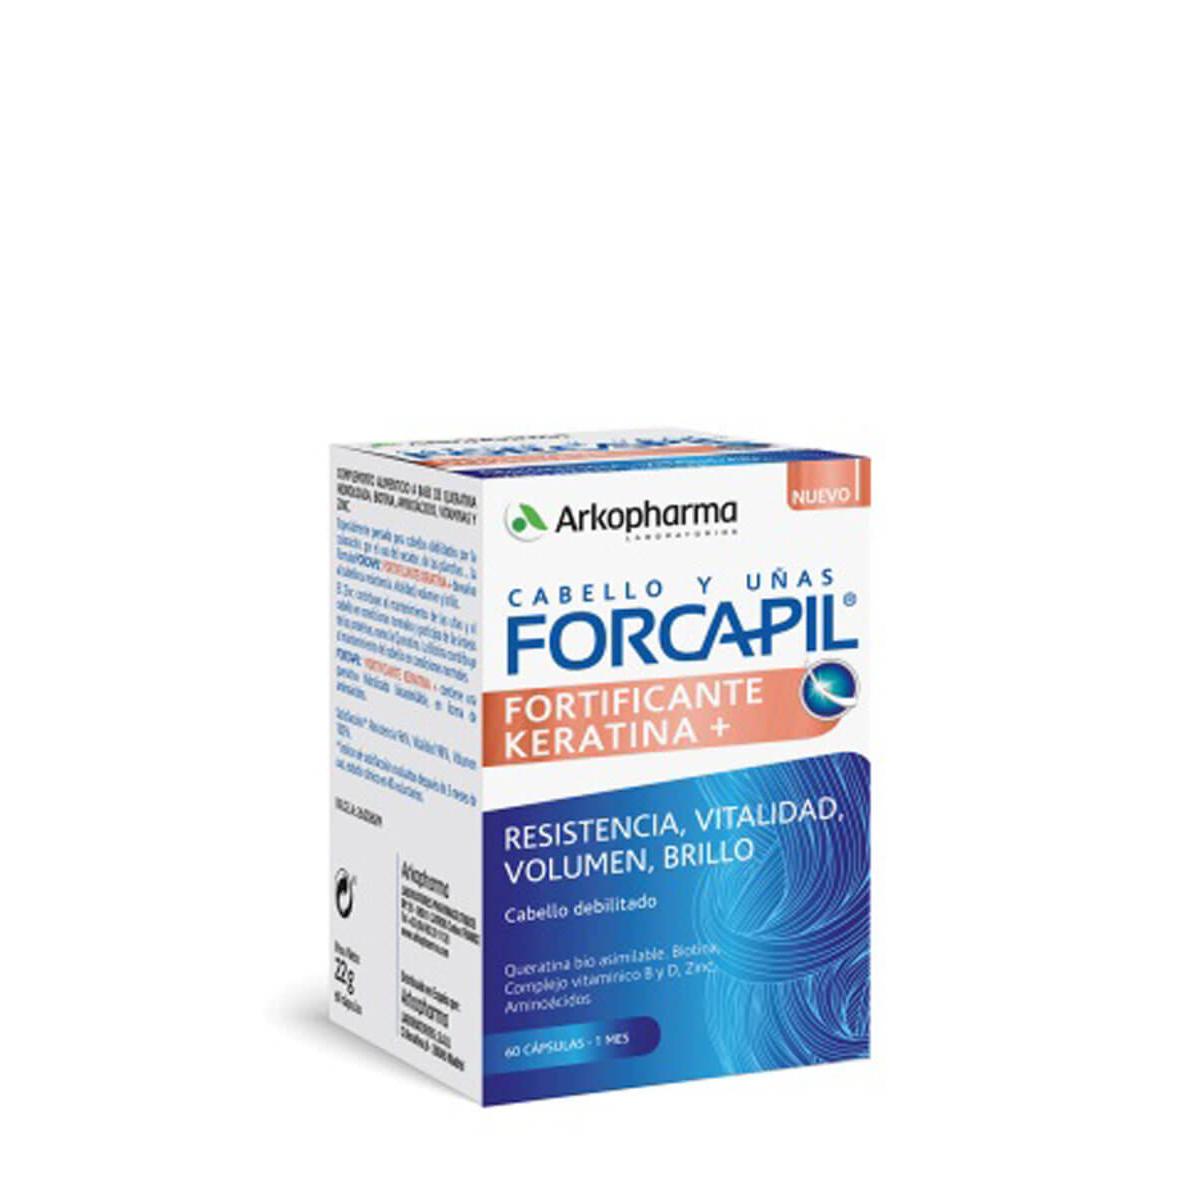 Arkopharma - Arkopharma forcapil fortificante 60 cápsulas